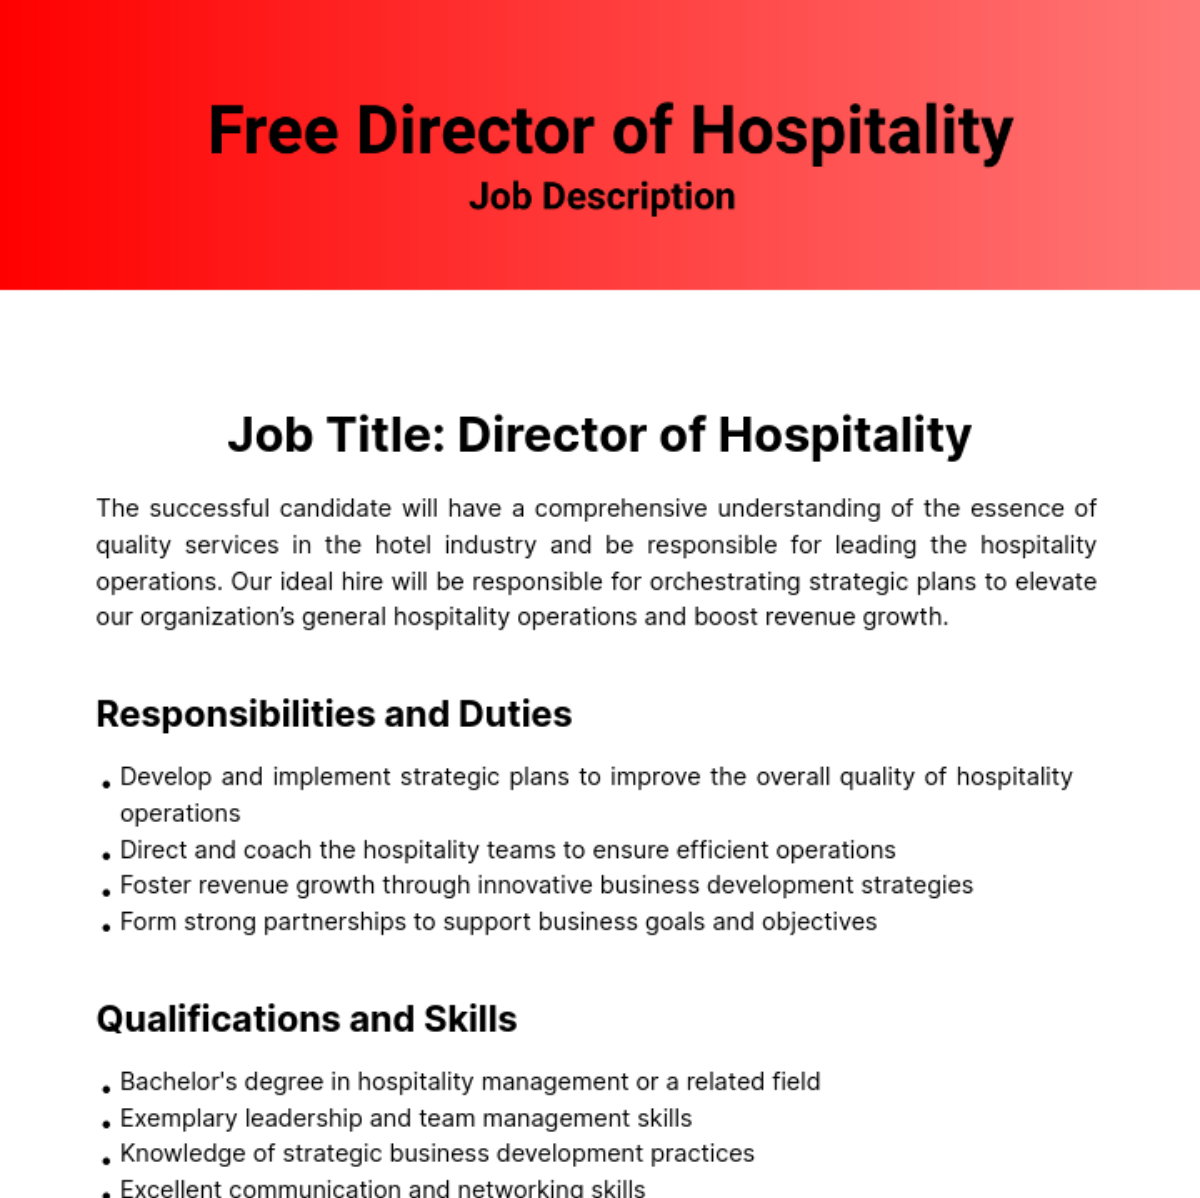 Director of Hospitality Job Description Template